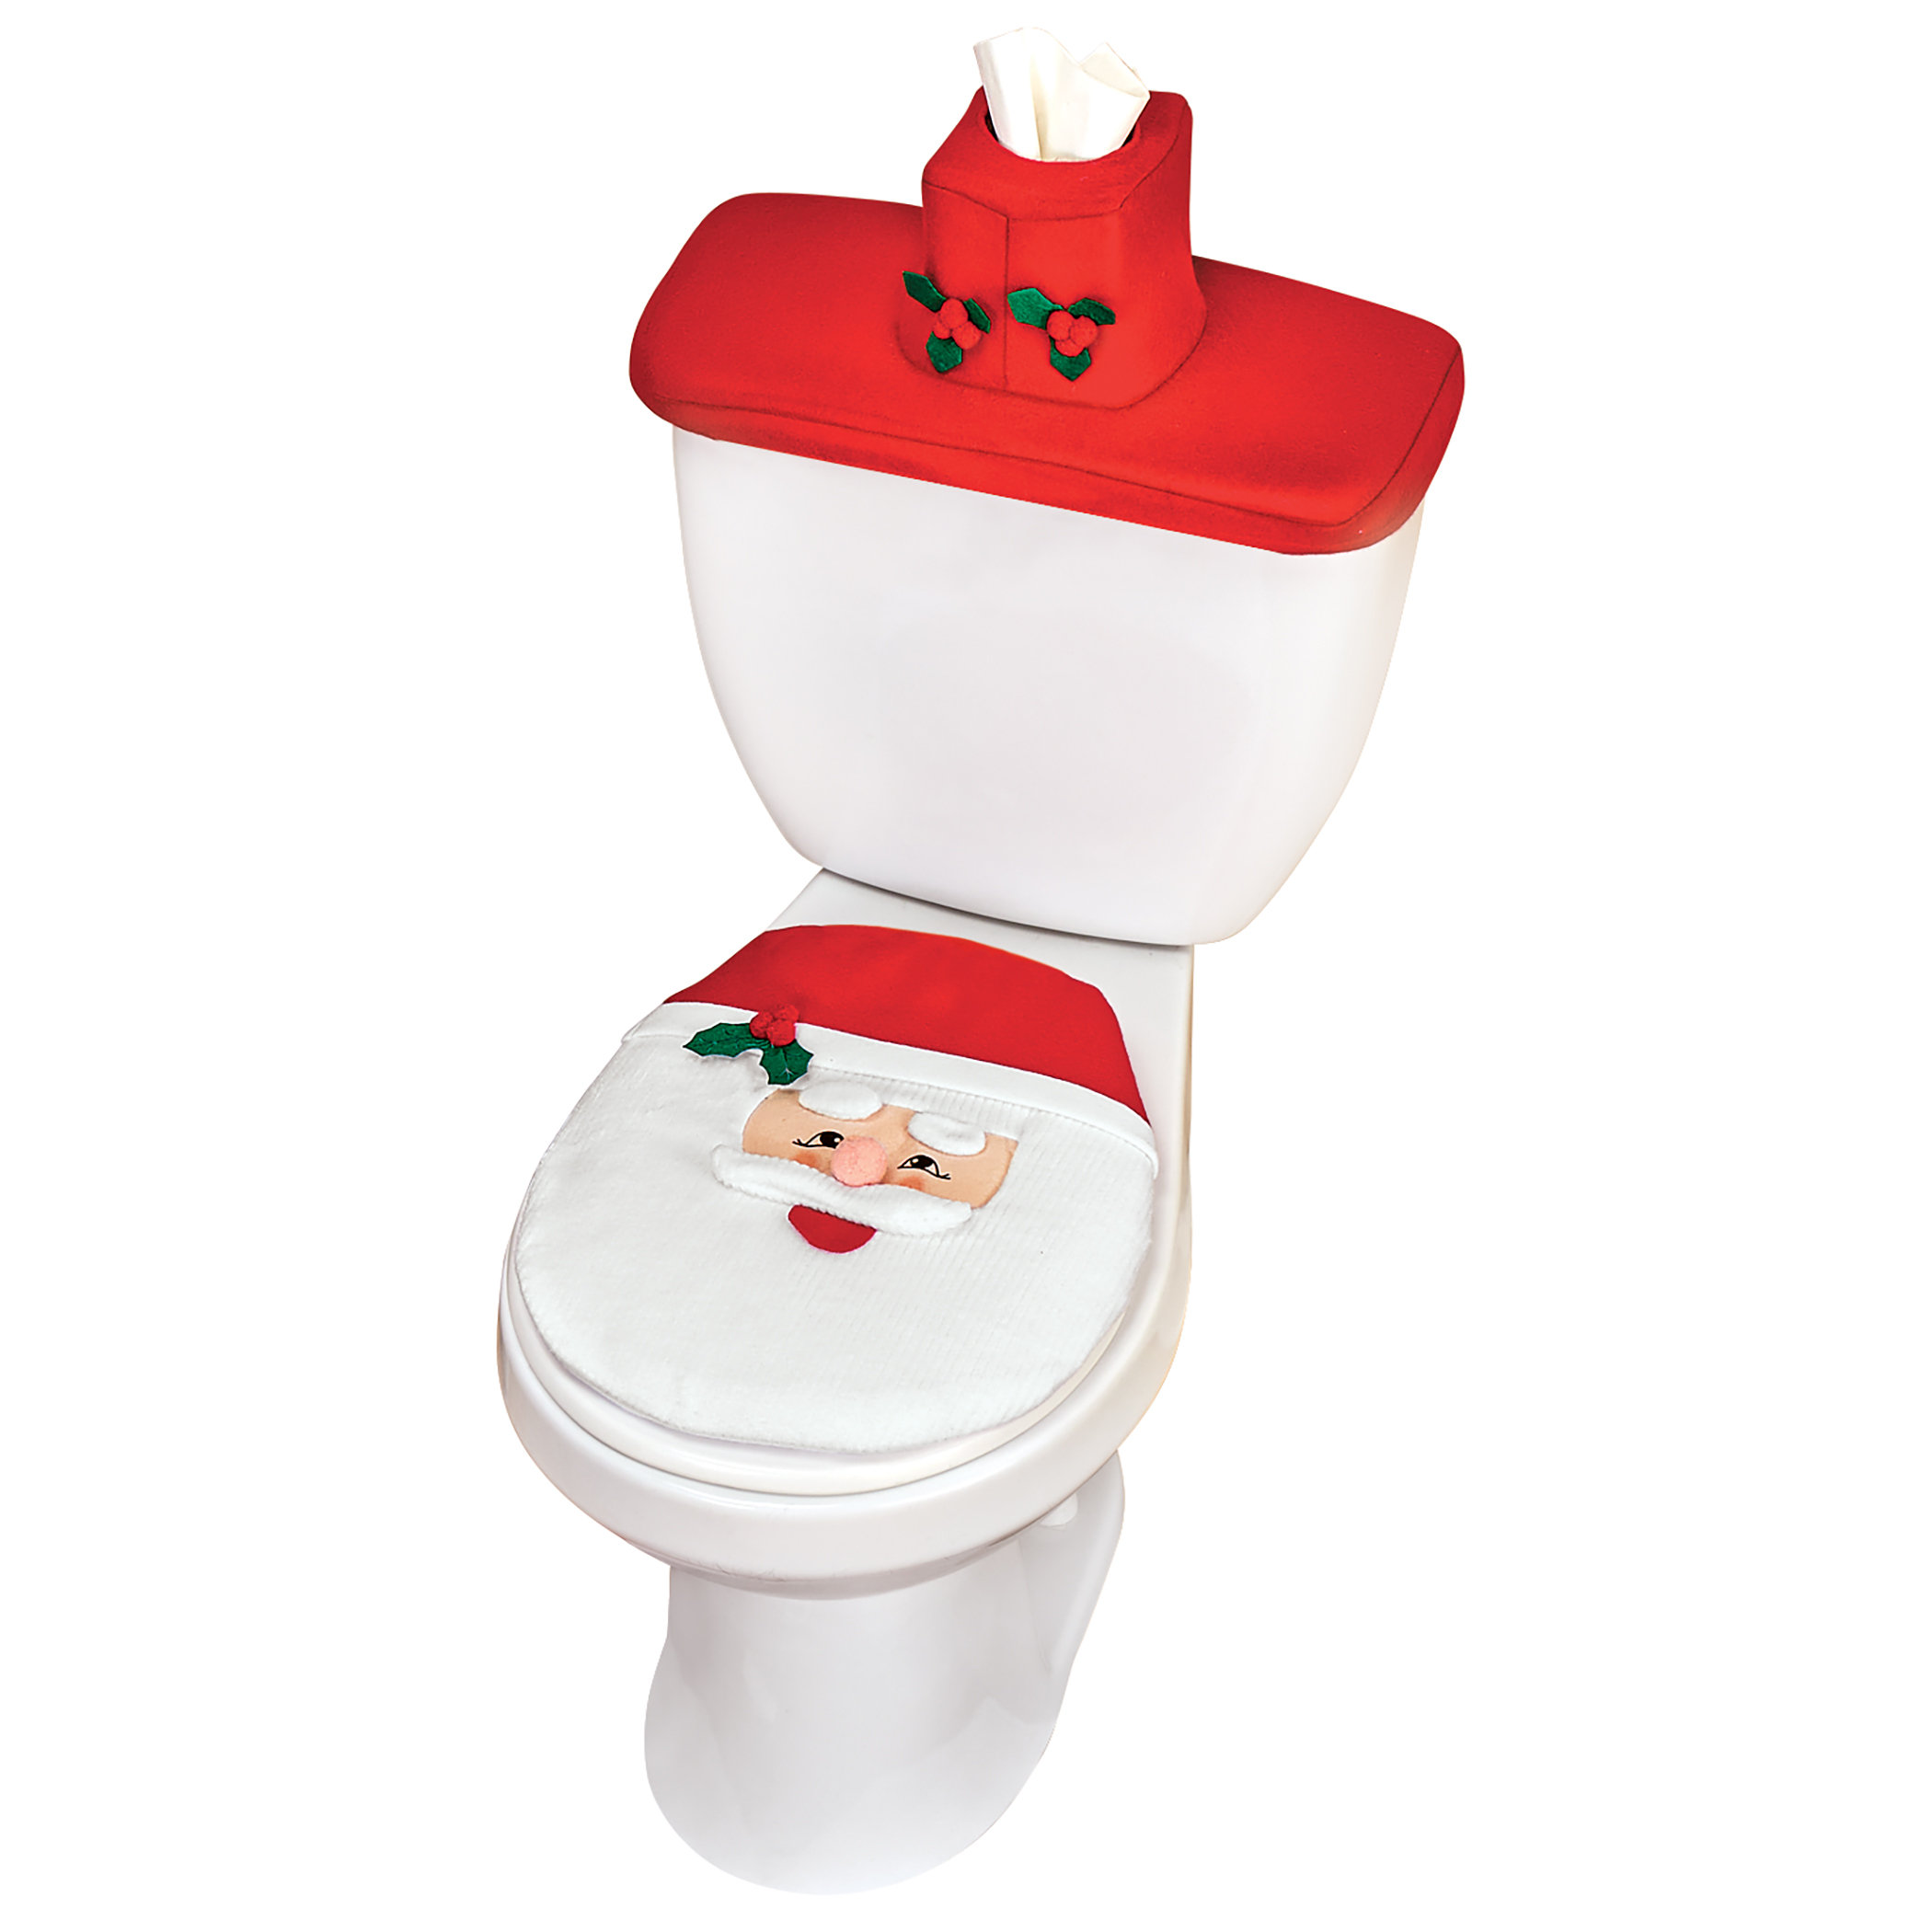 The Holiday Aisle® Yoann Toilet Seat Cover | Wayfair